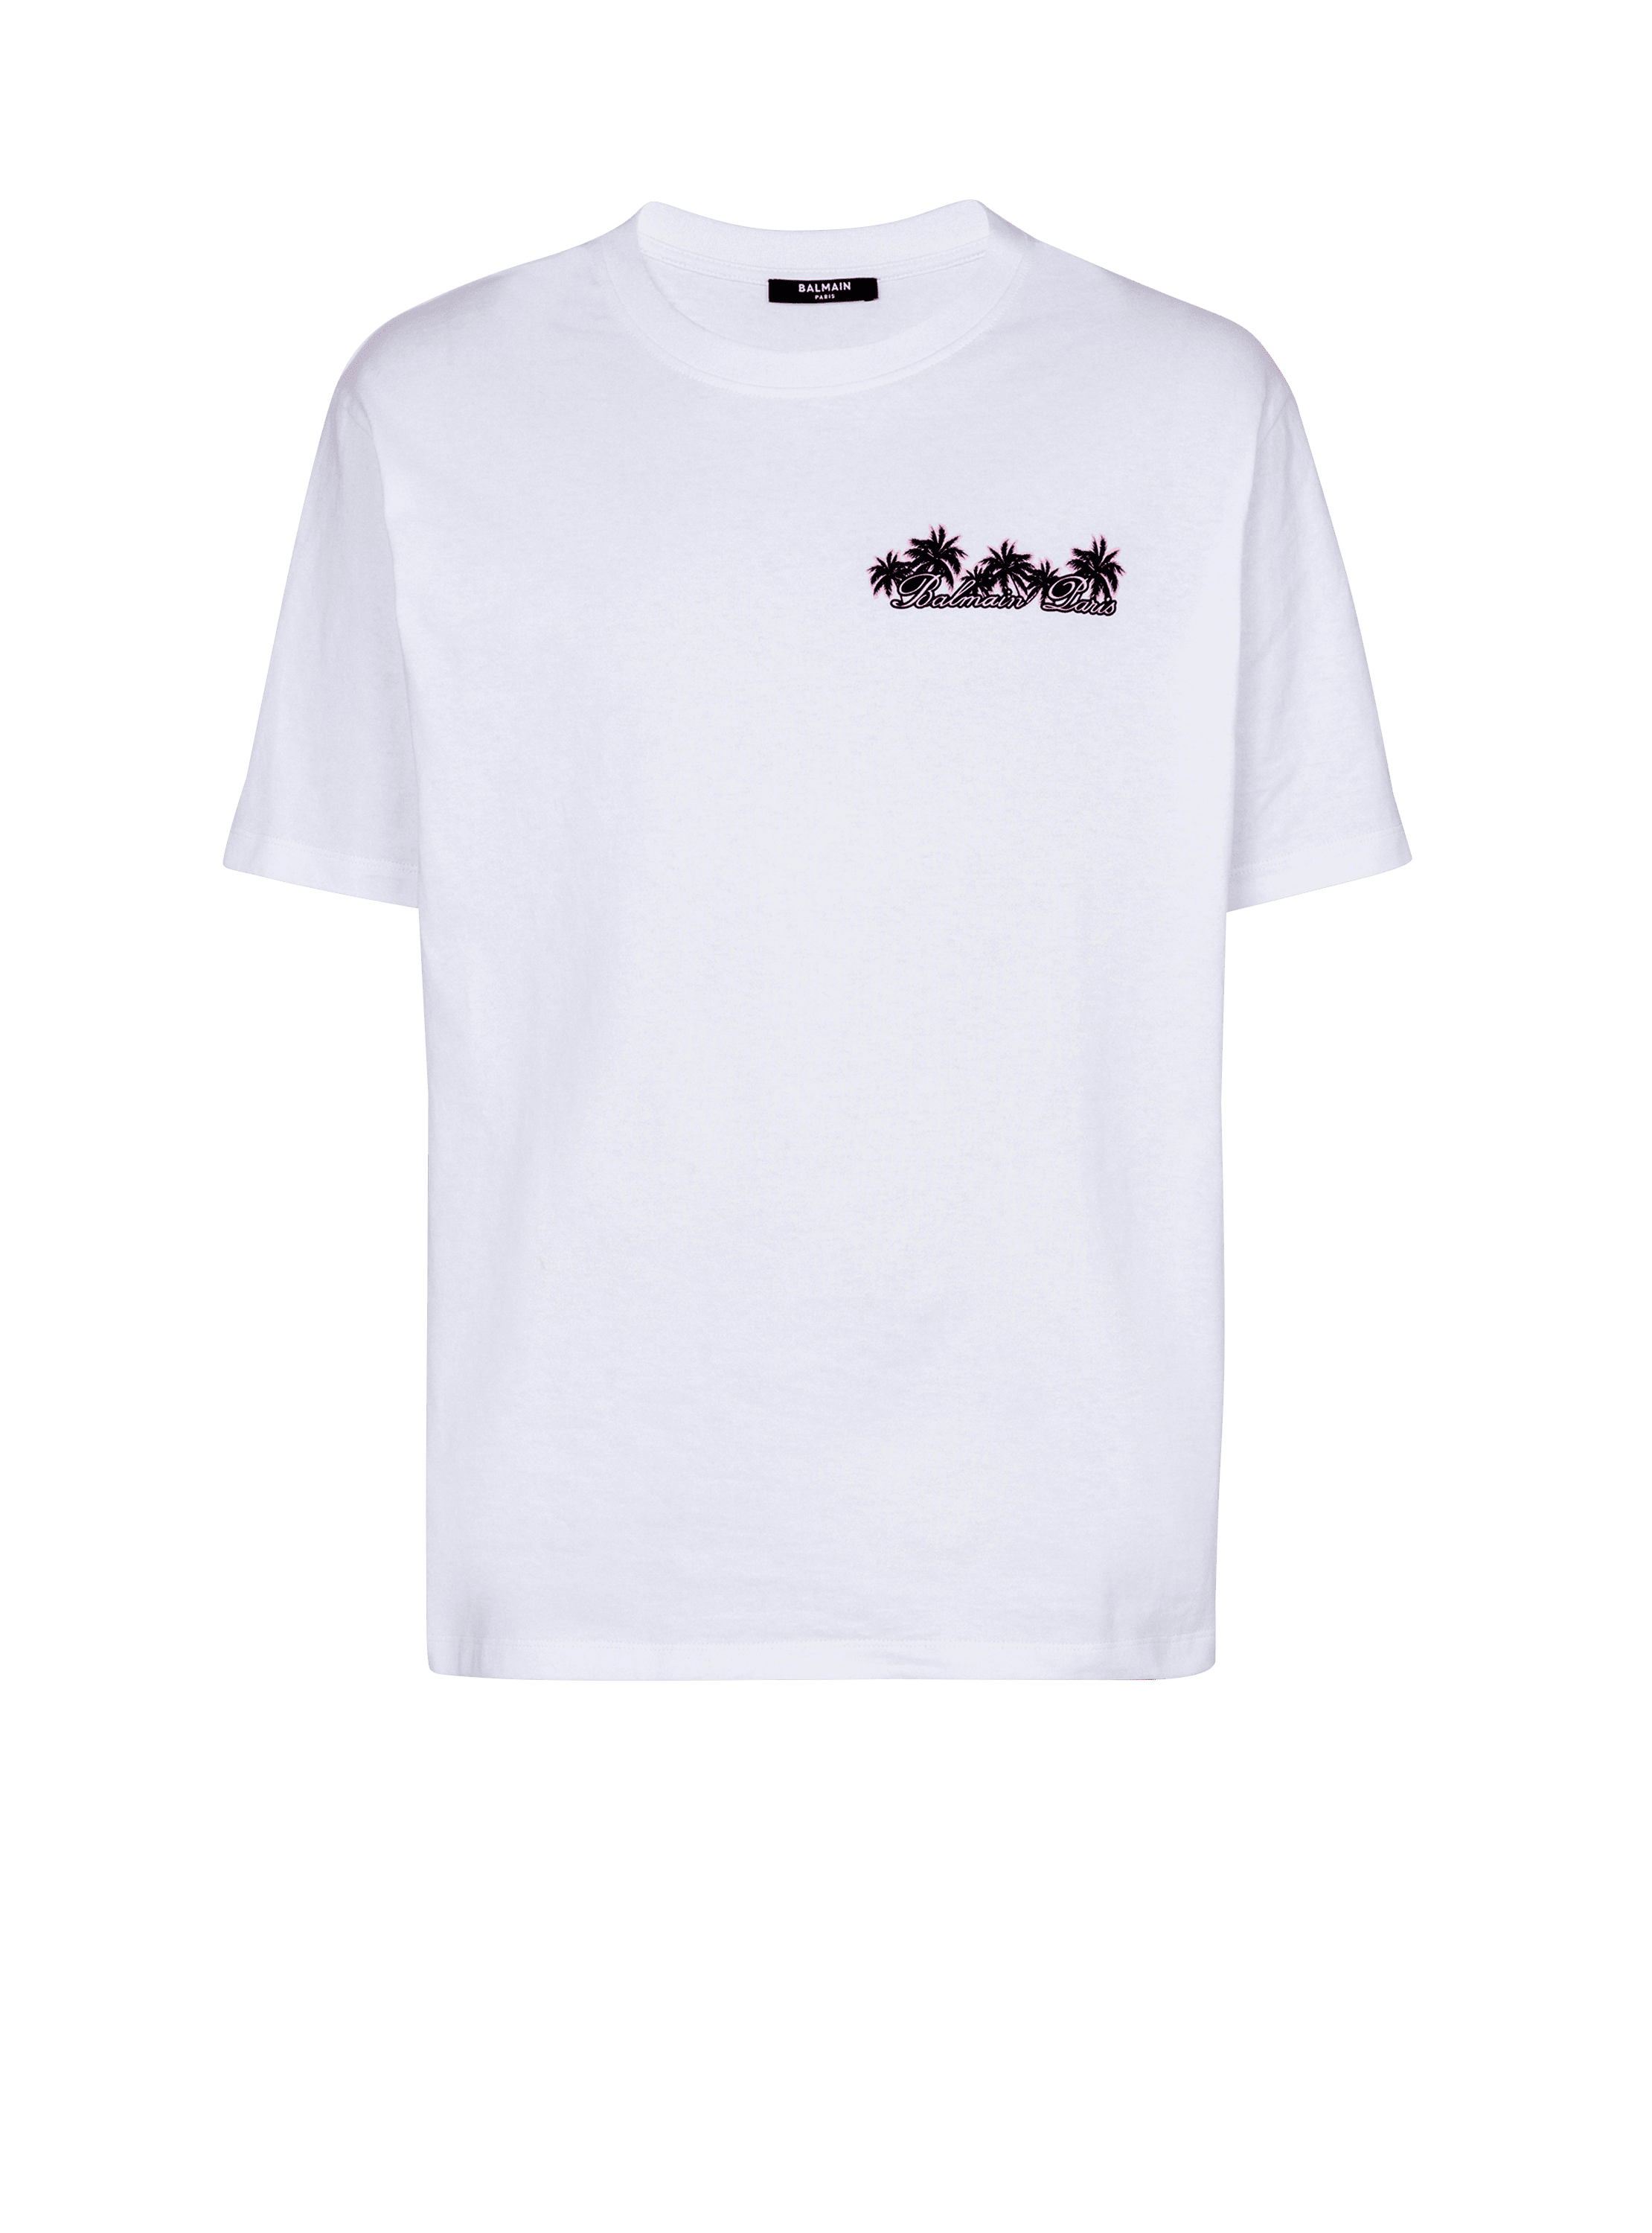 Club Balmain Signature printed T-shirt